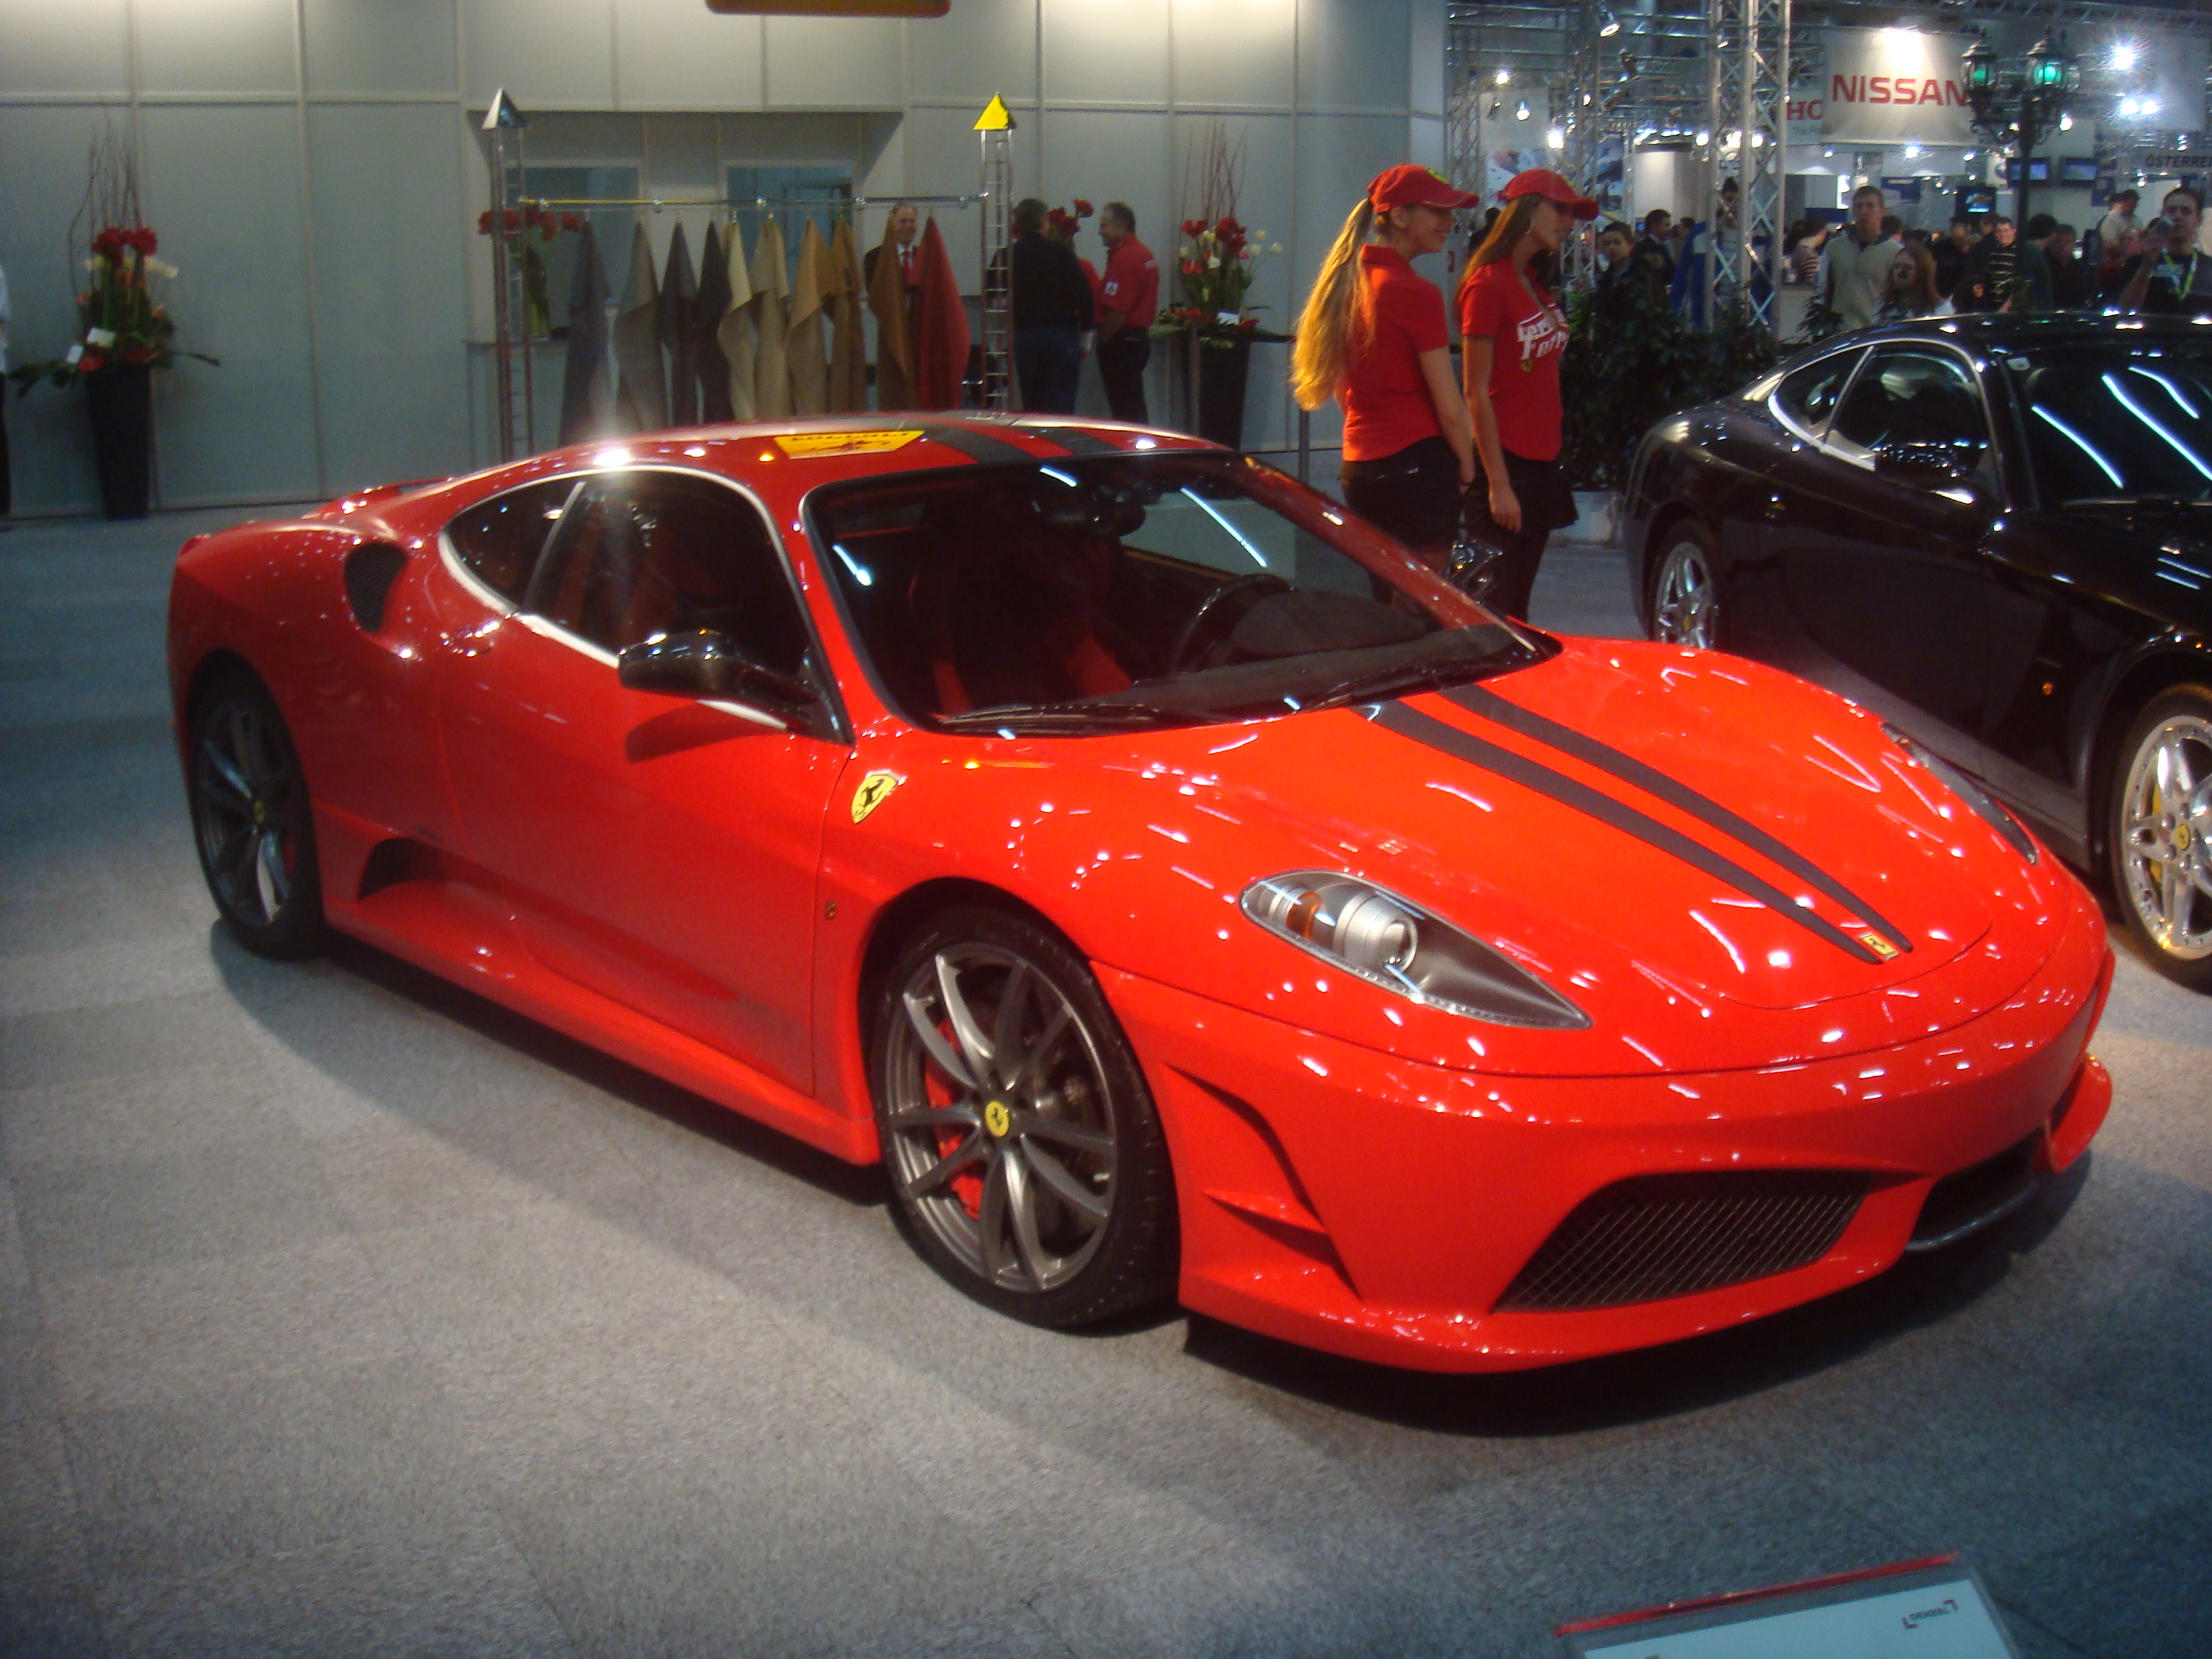 File:Ferrari Scuderia red2.JPG - Wikimedia Commons